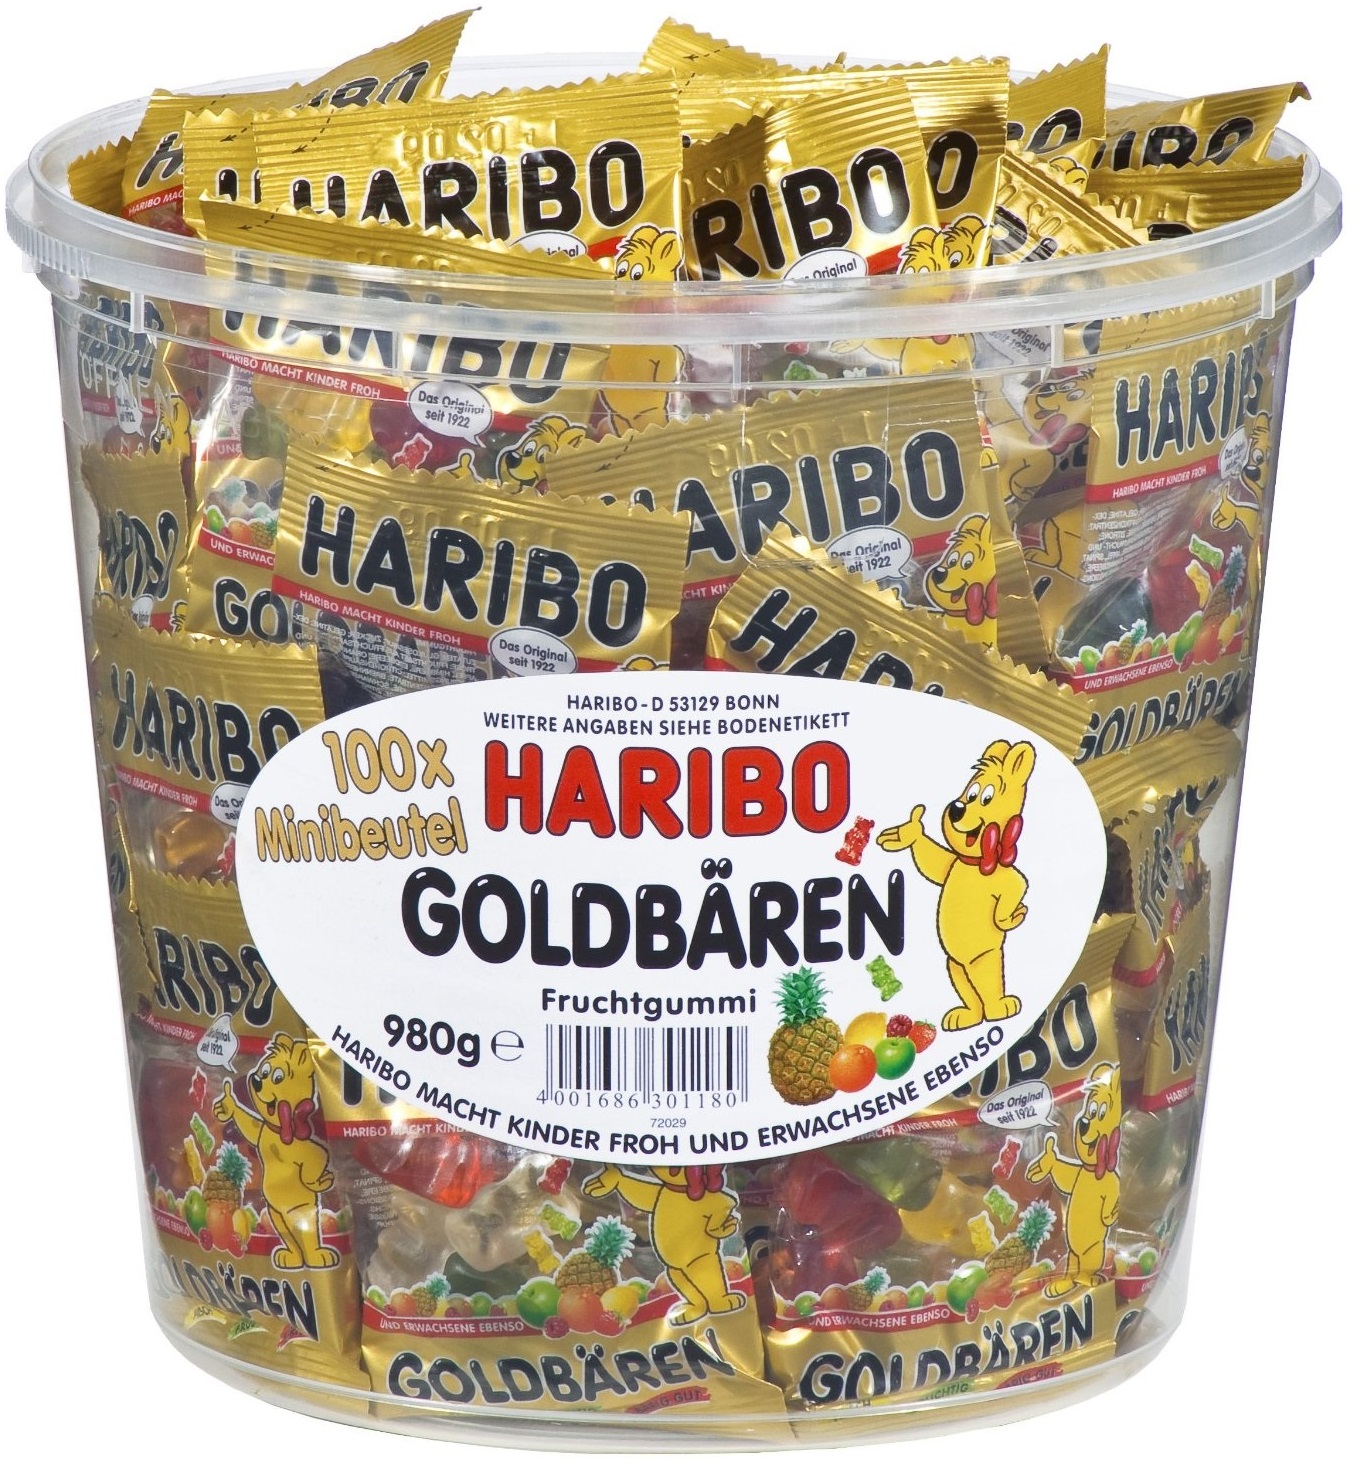 gold bear tin, bags, 980g | Schafi-Shop